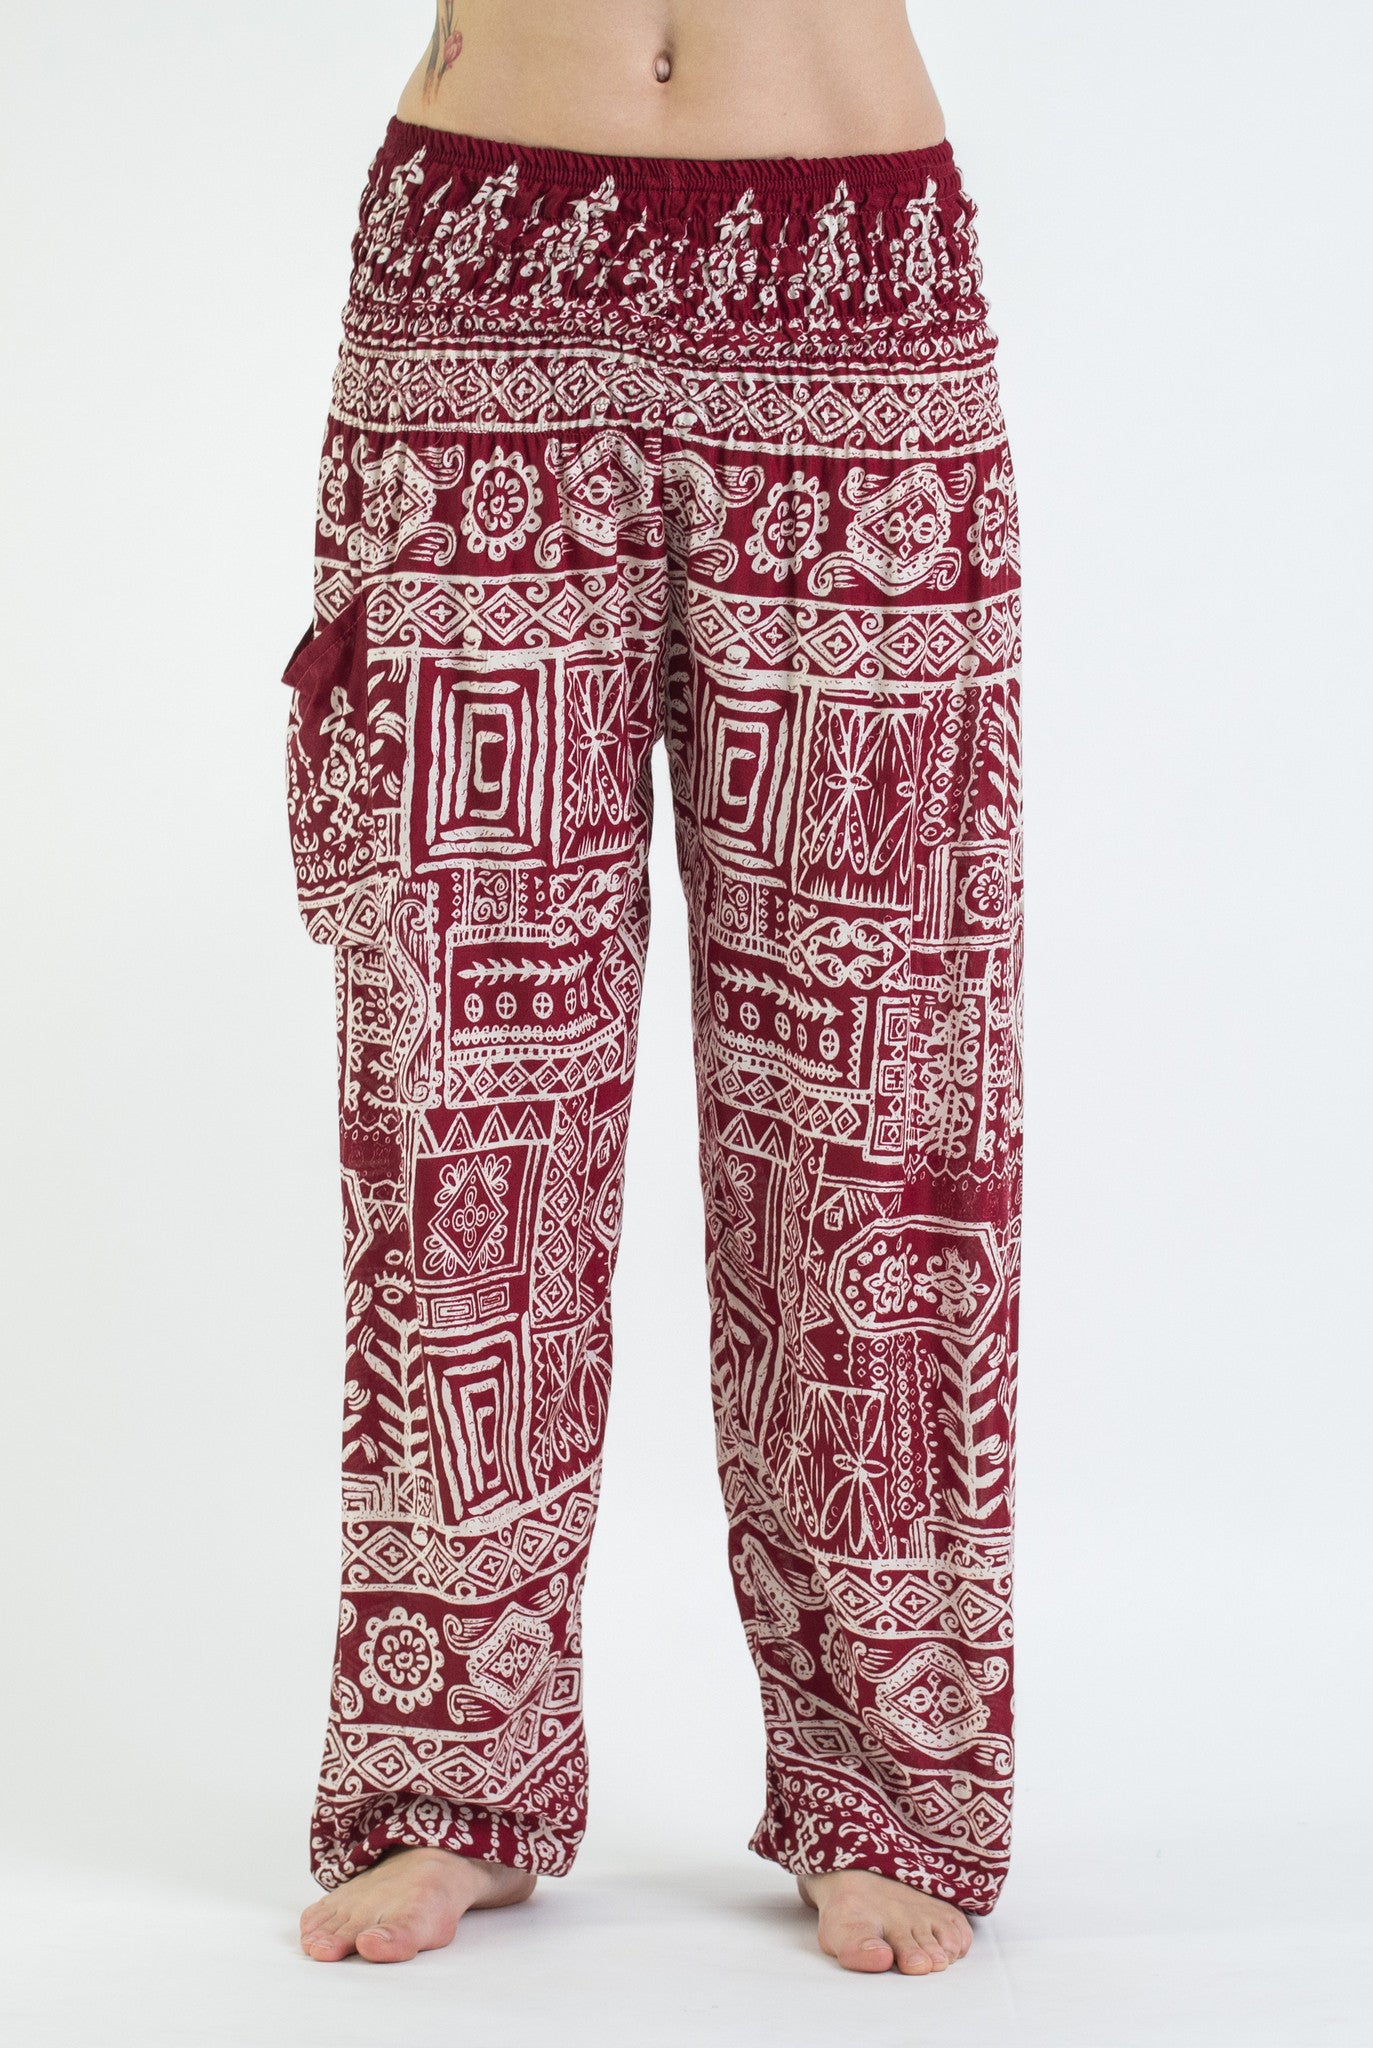 Tribal Prints Unisex Harem Pants in Red | Sure Design